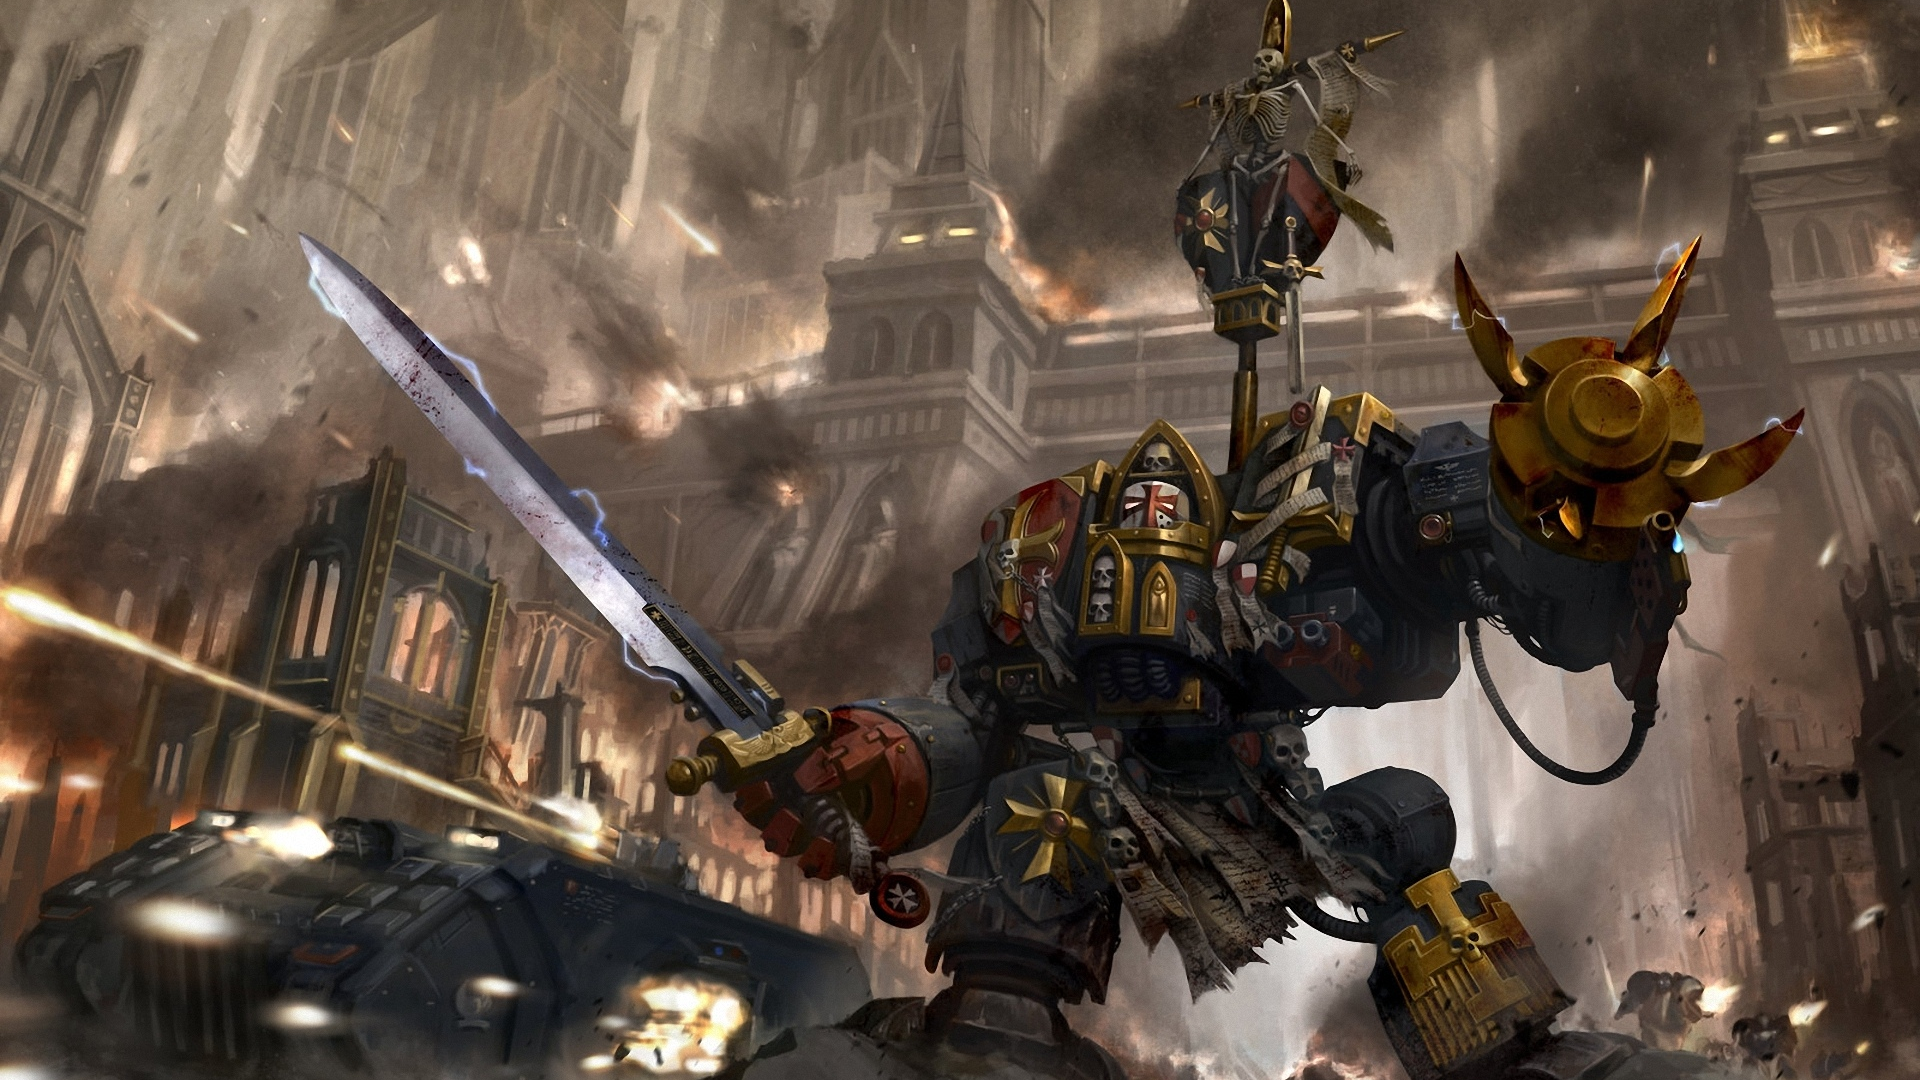  okita , space marines, меч, dreadnought, black templars, warhammer 40k, арт, металл